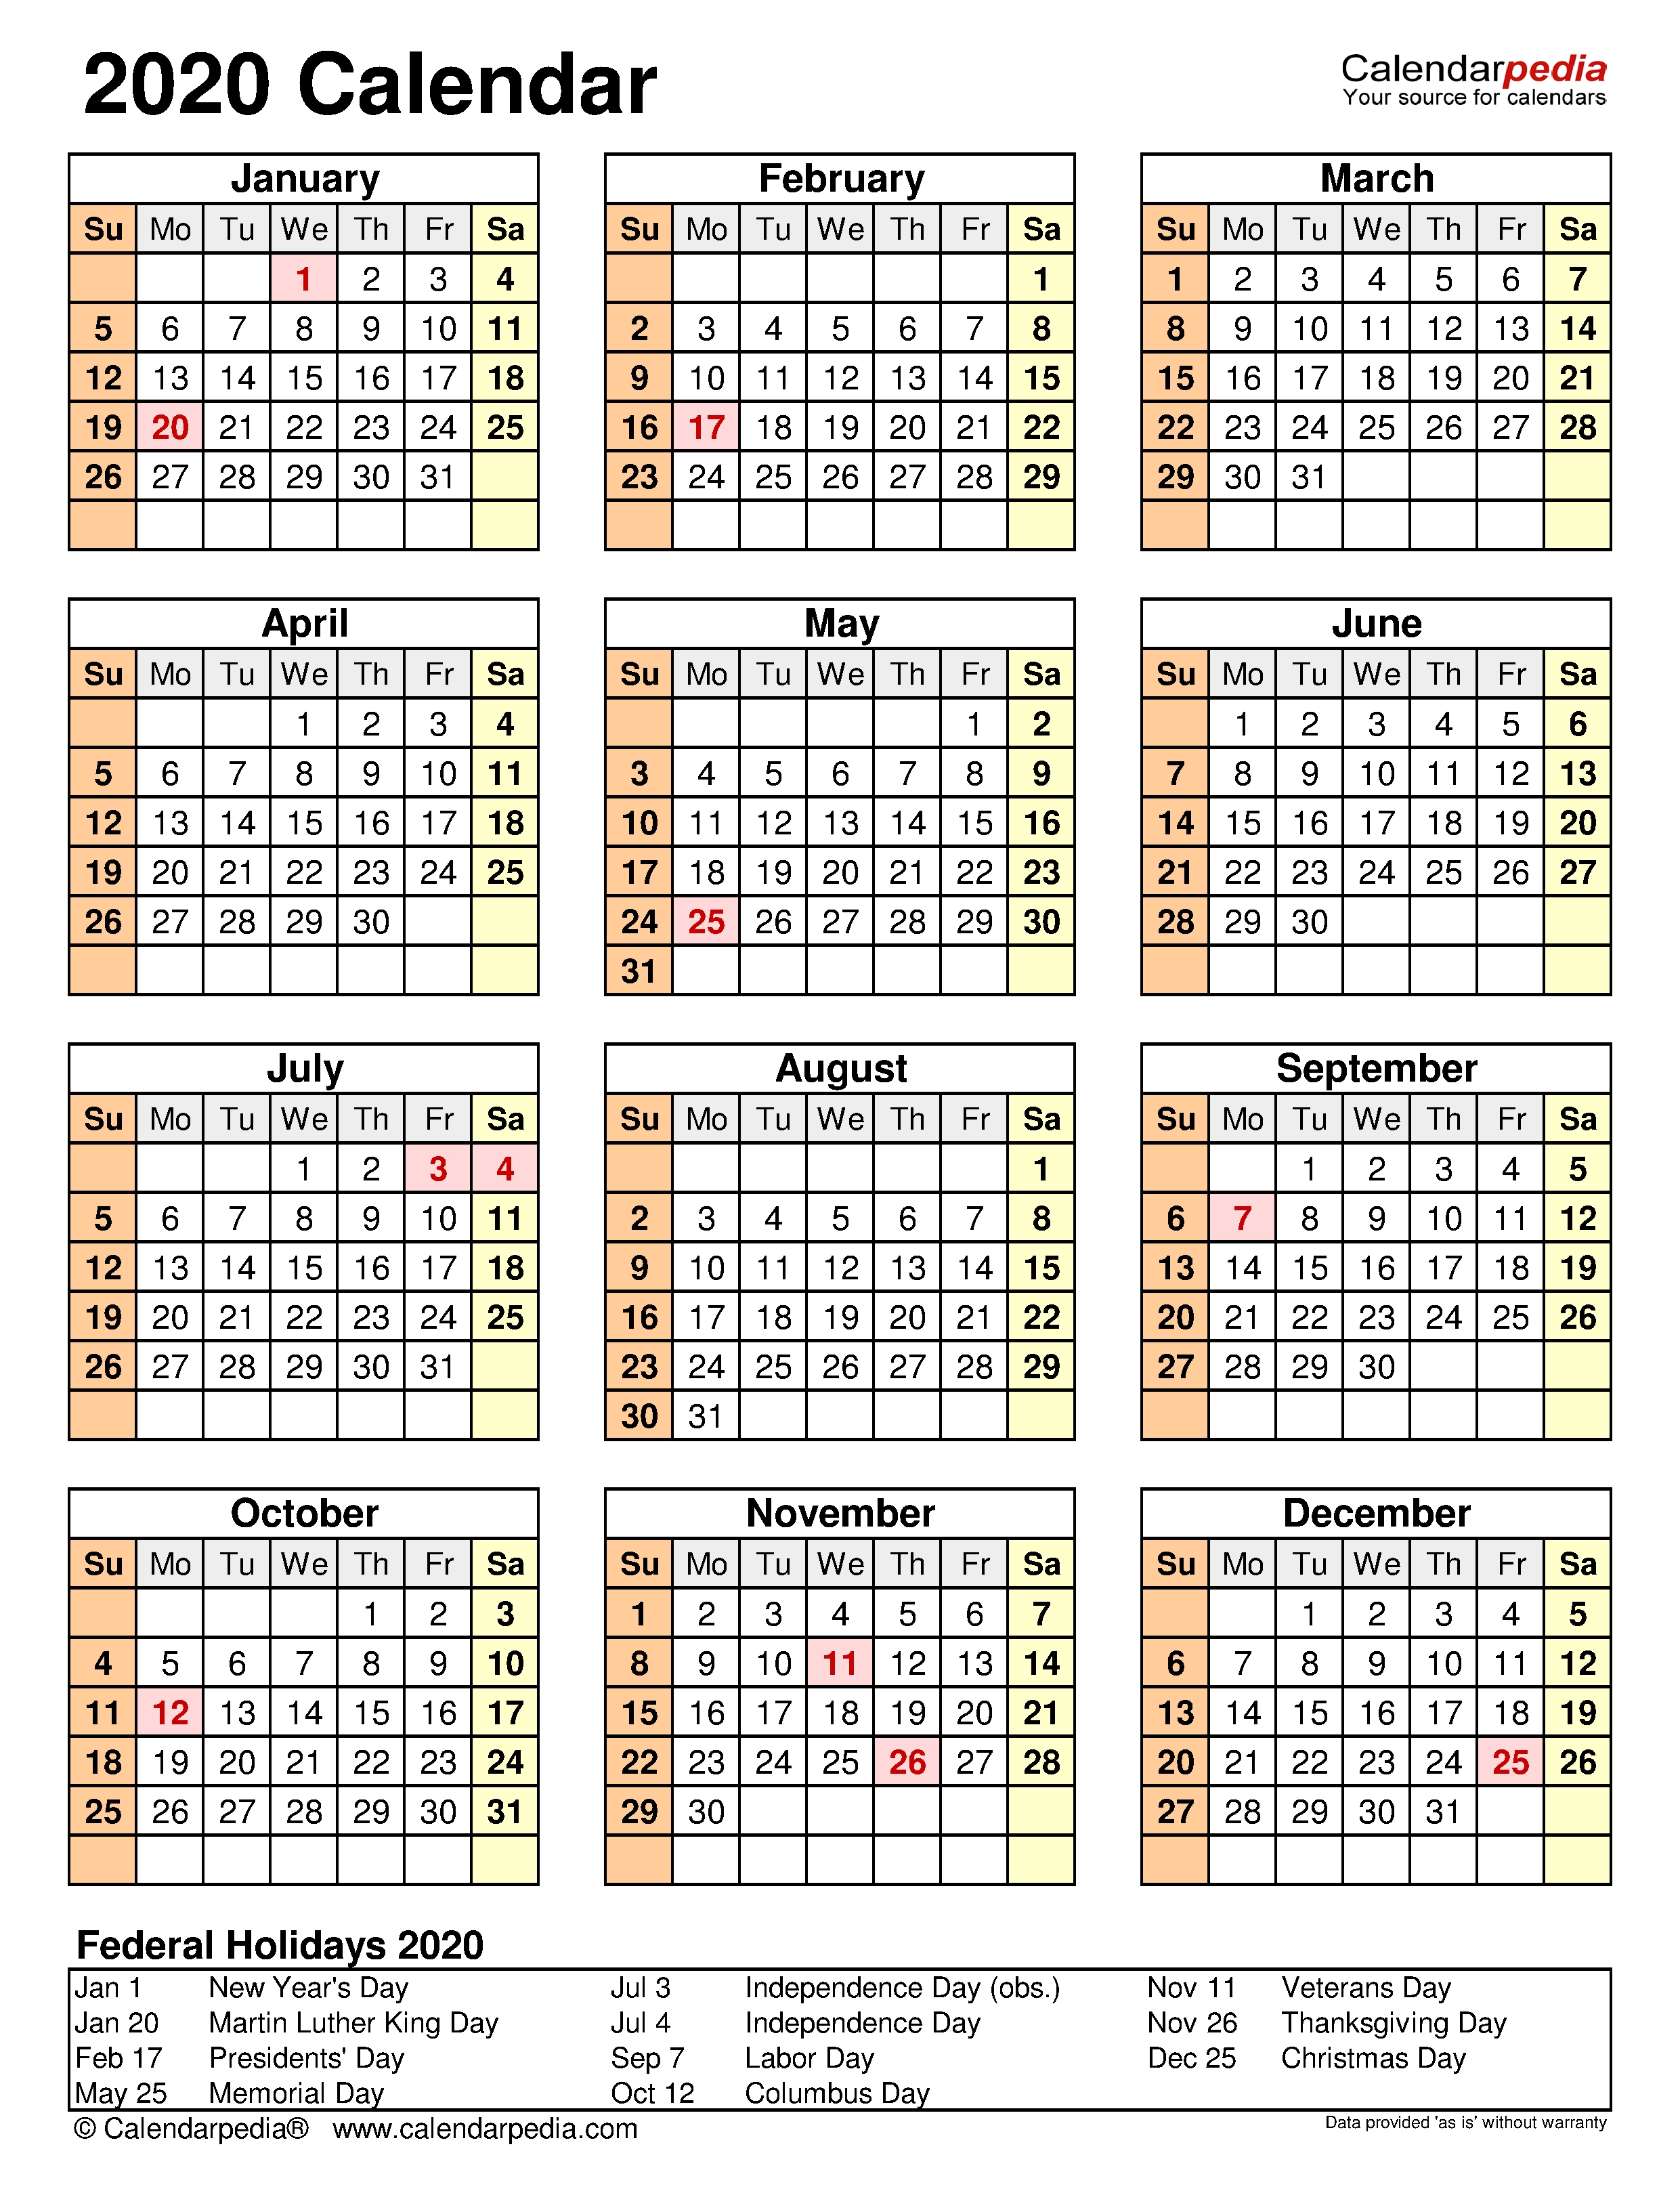 2020 Calendar - Free Printable Excel Templates - Calendarpedia 2021 Myanmar Calendar Microsoft Office